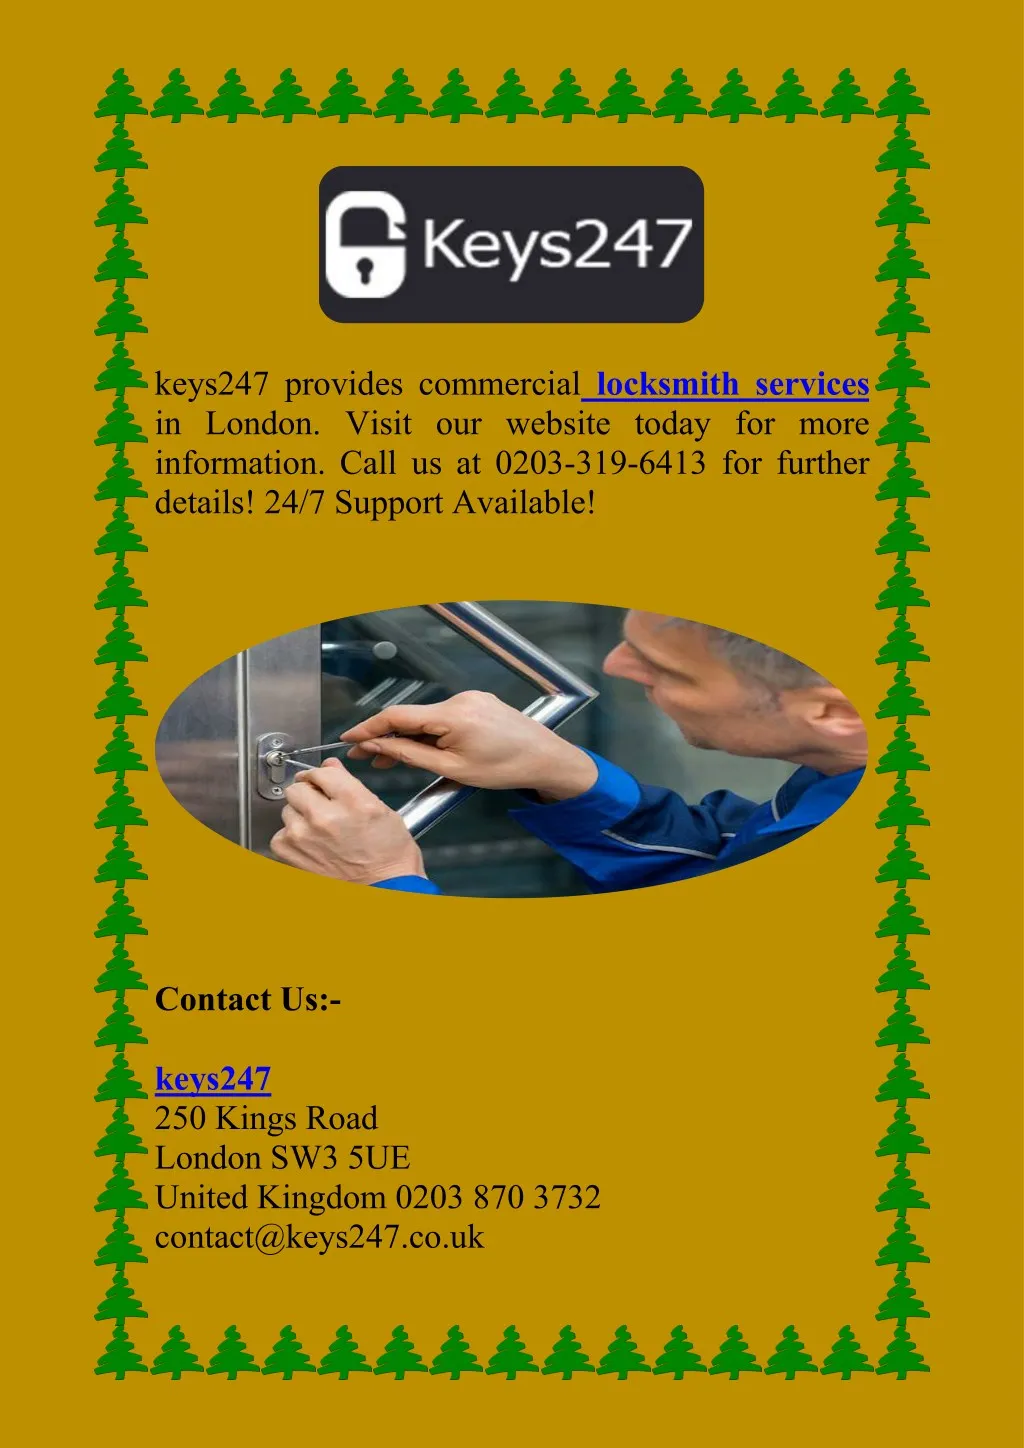 keys247 provides commercial locksmith services